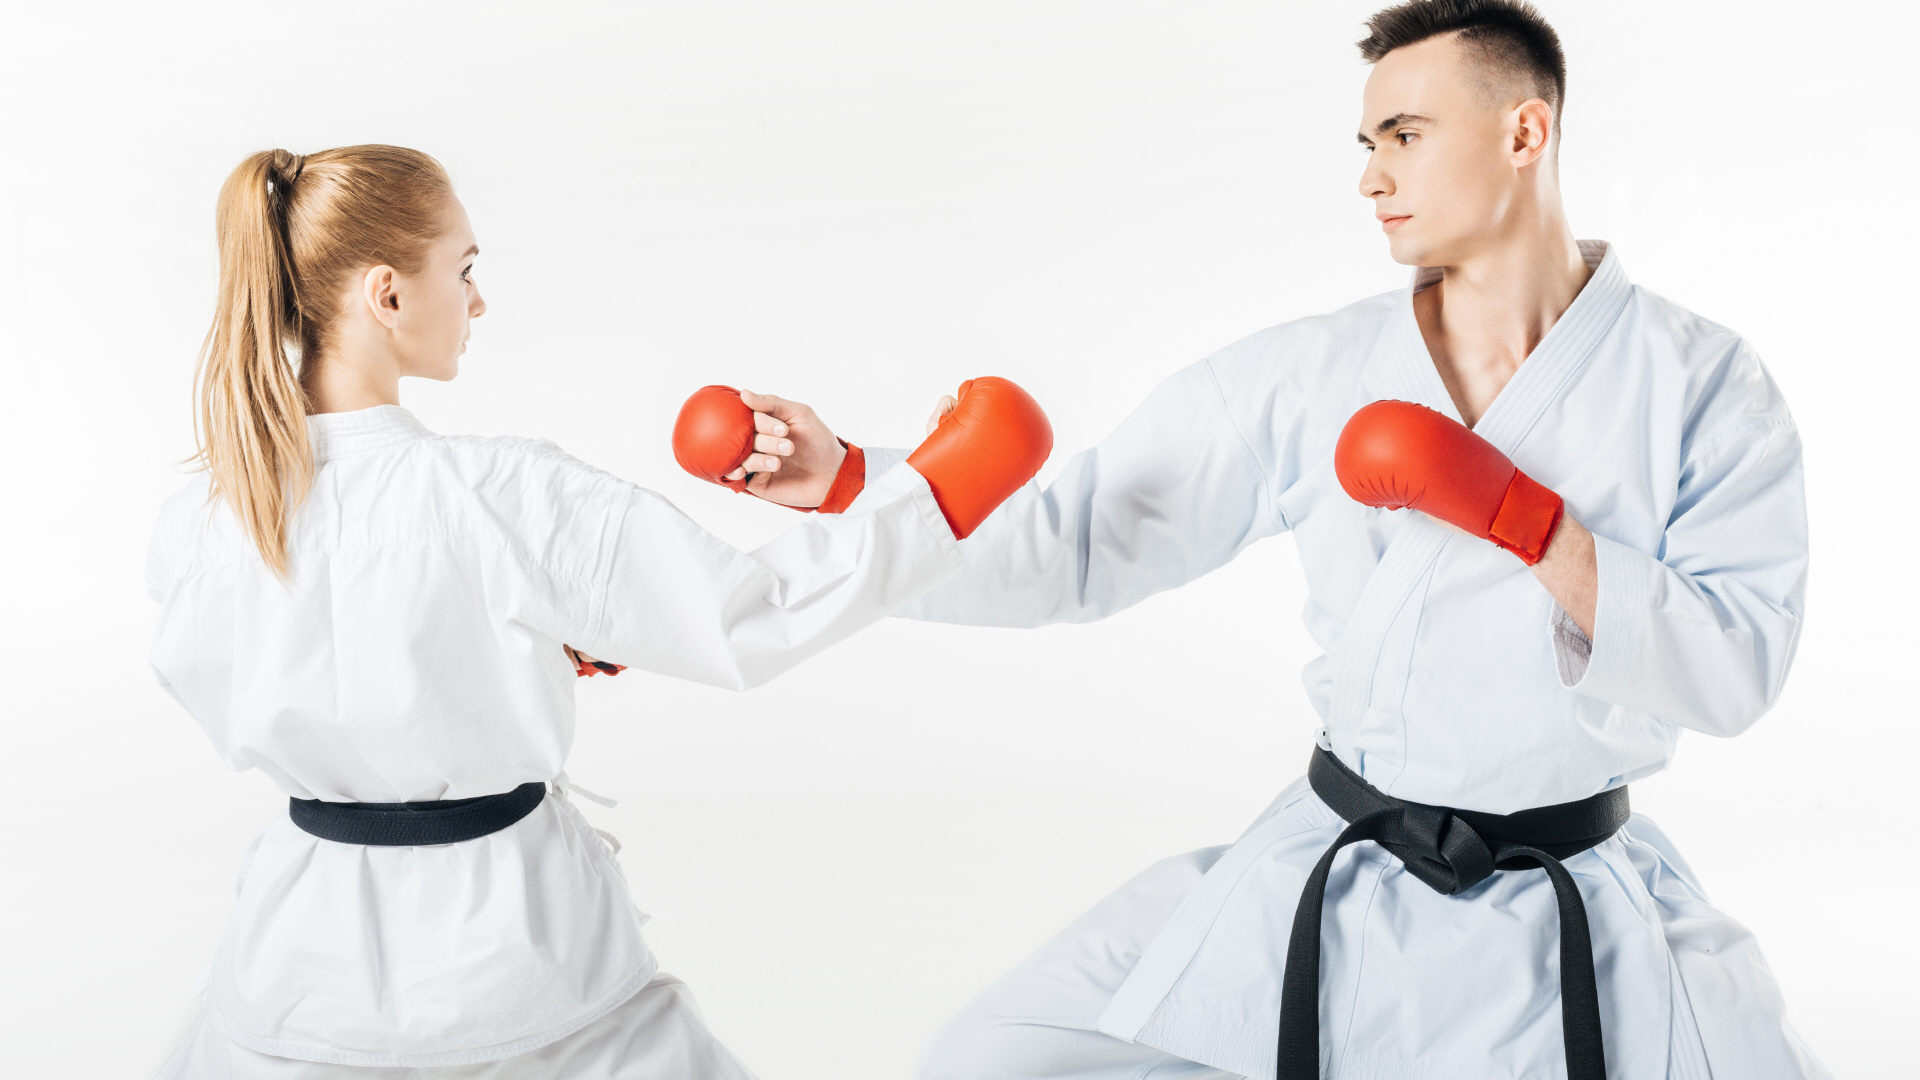 Karate: Kyokushin style, A full-contact martial art, A school originating from Japan. 1920x1080 Full HD Wallpaper.